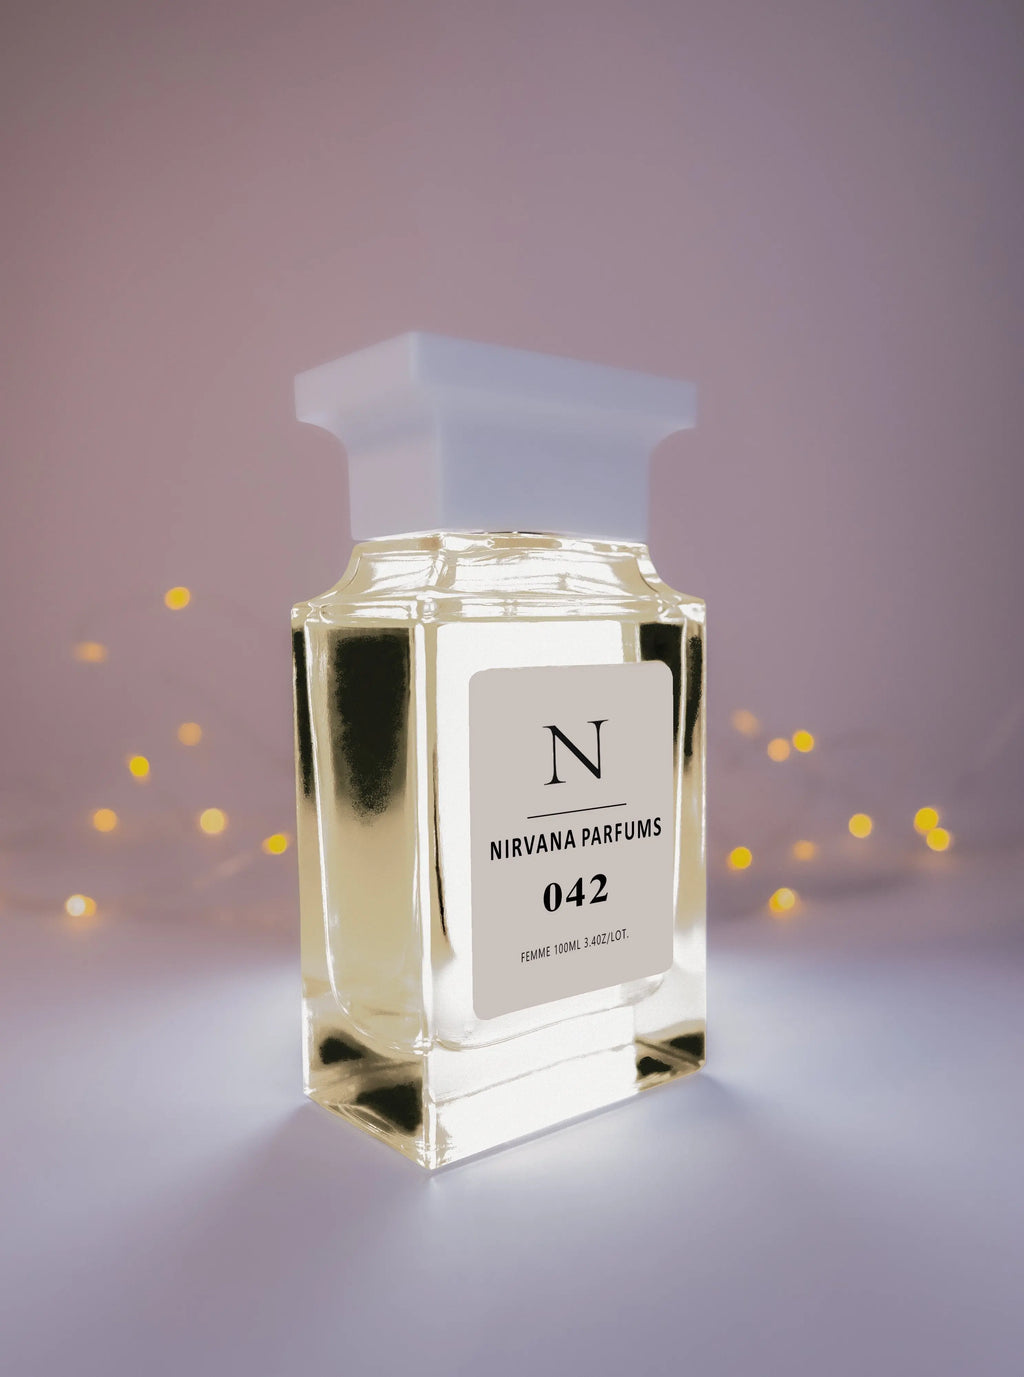 NIRVANA 042 recuerda a Chance Eau de parfum. www.nirvanaparfums.es